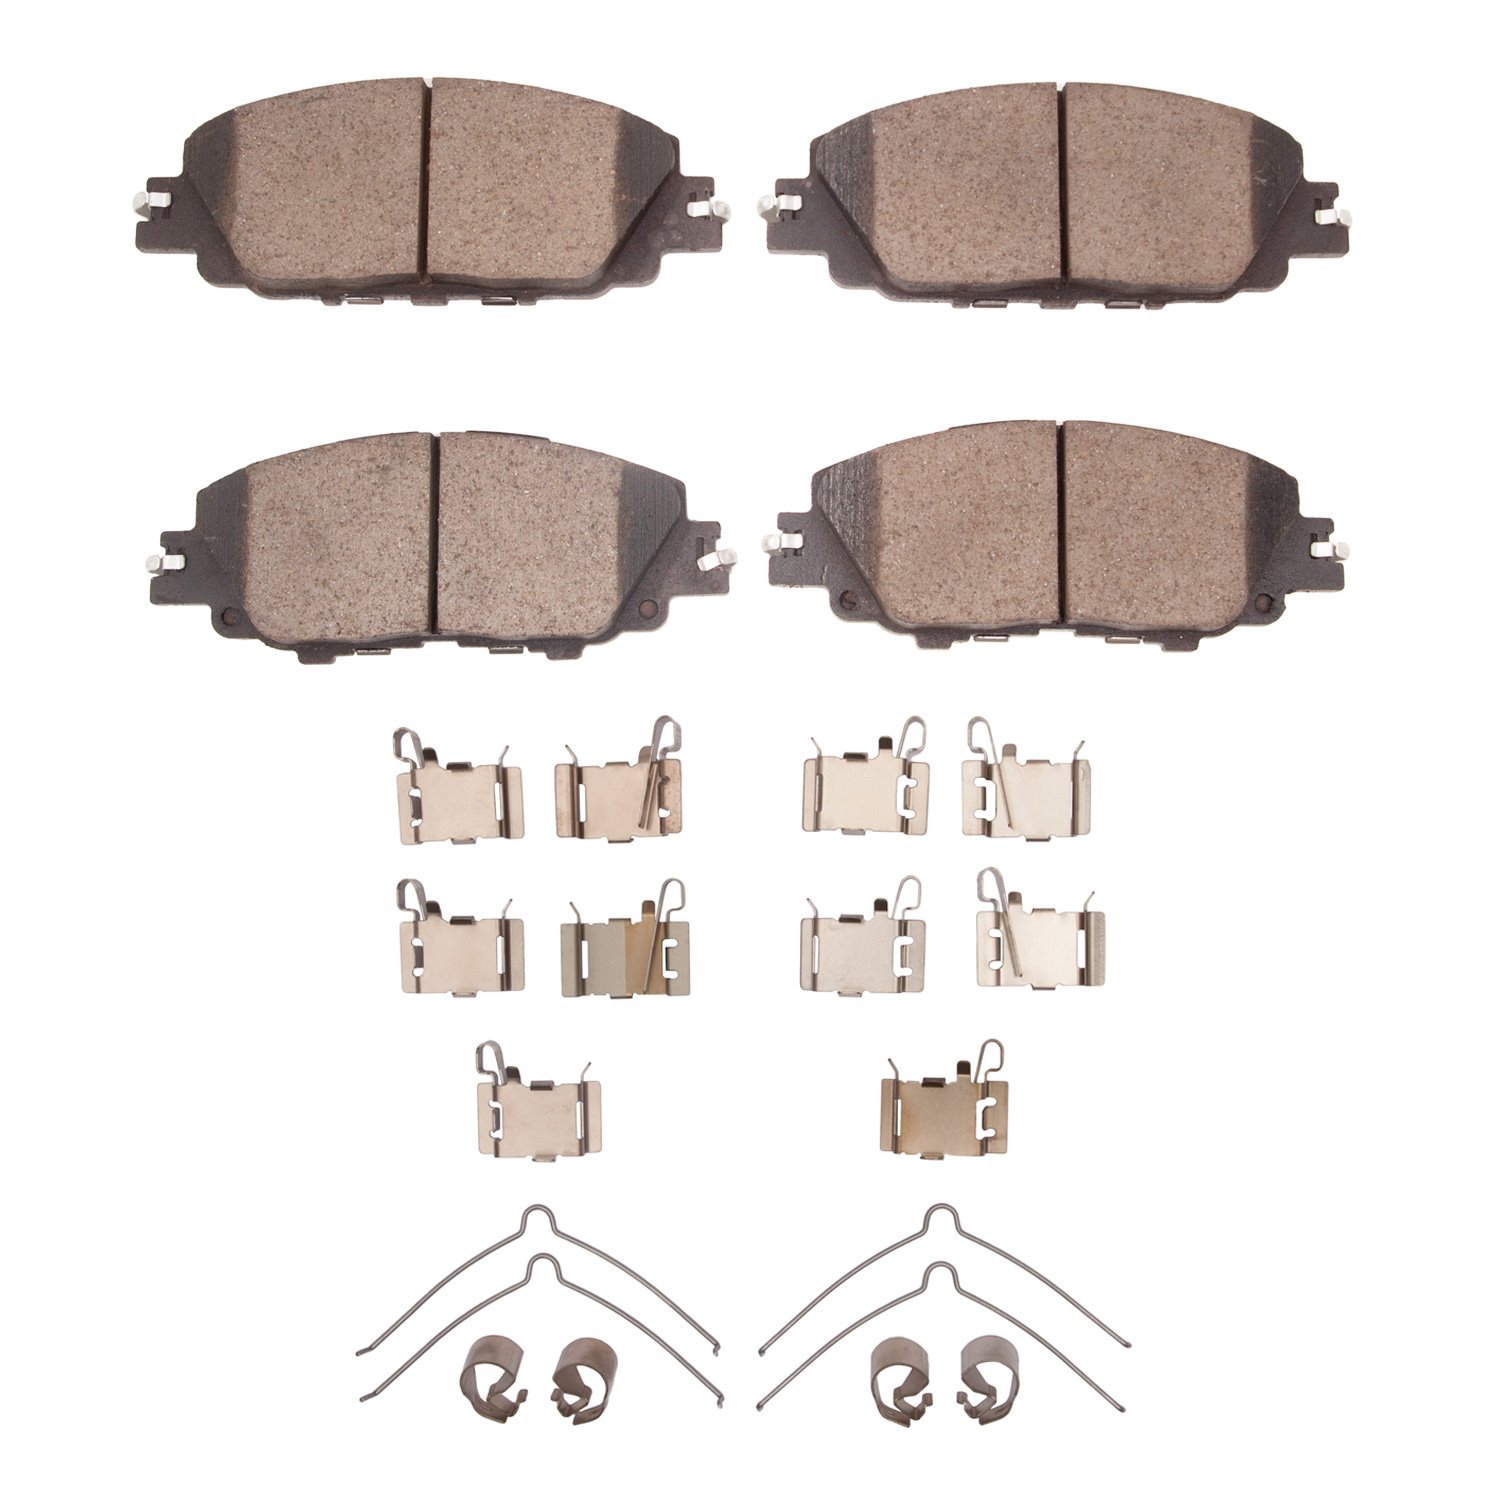 1310-2176-01 3000-Series Ceramic Brake Pads & Hardware Kit, Fits Select Lexus/Toyota/Scion, Position: Front